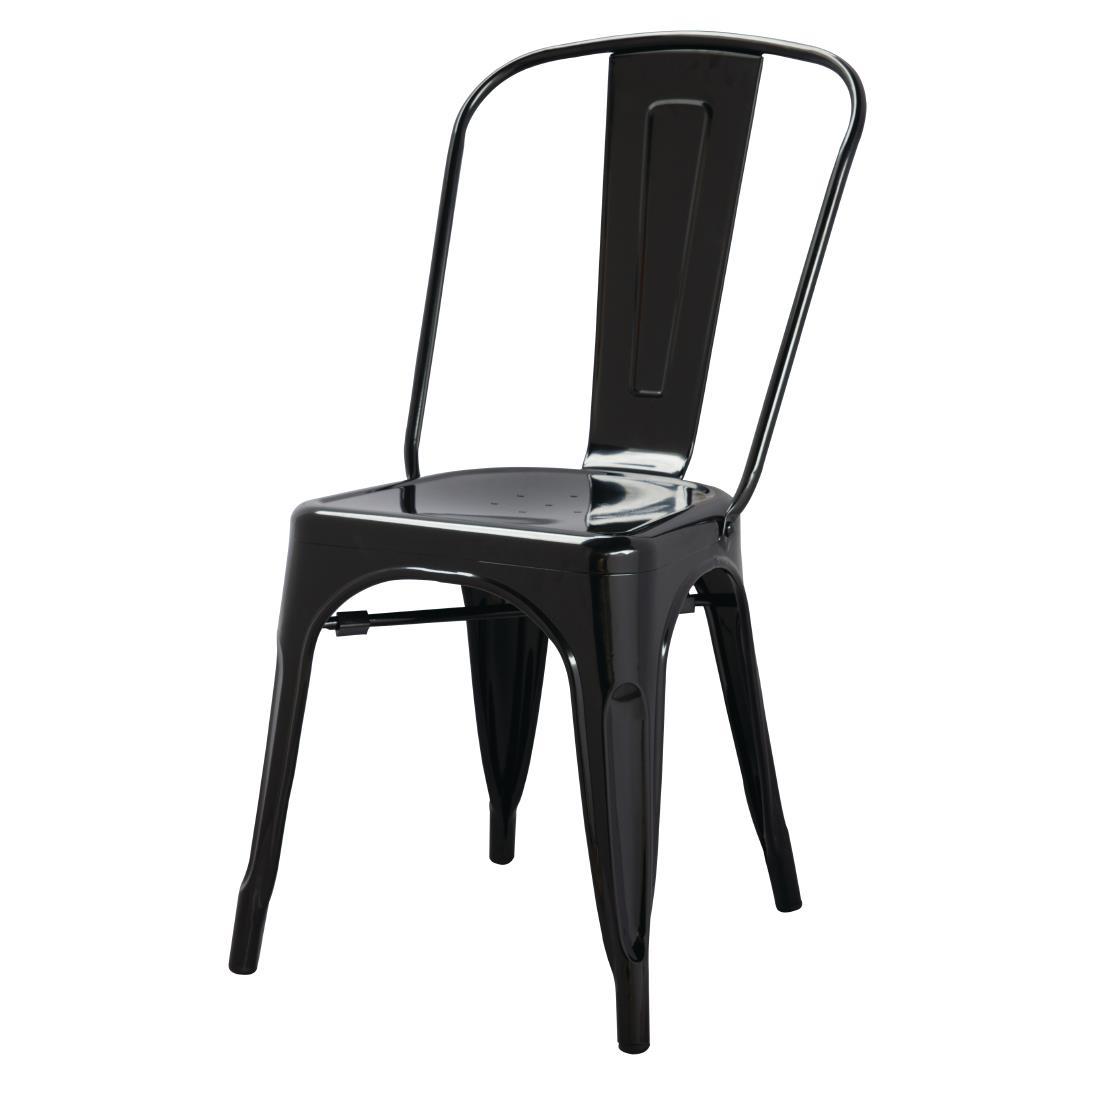 Bolero Bistro Steel Side Chairs Black (Pack of 4) - GL331  - 2